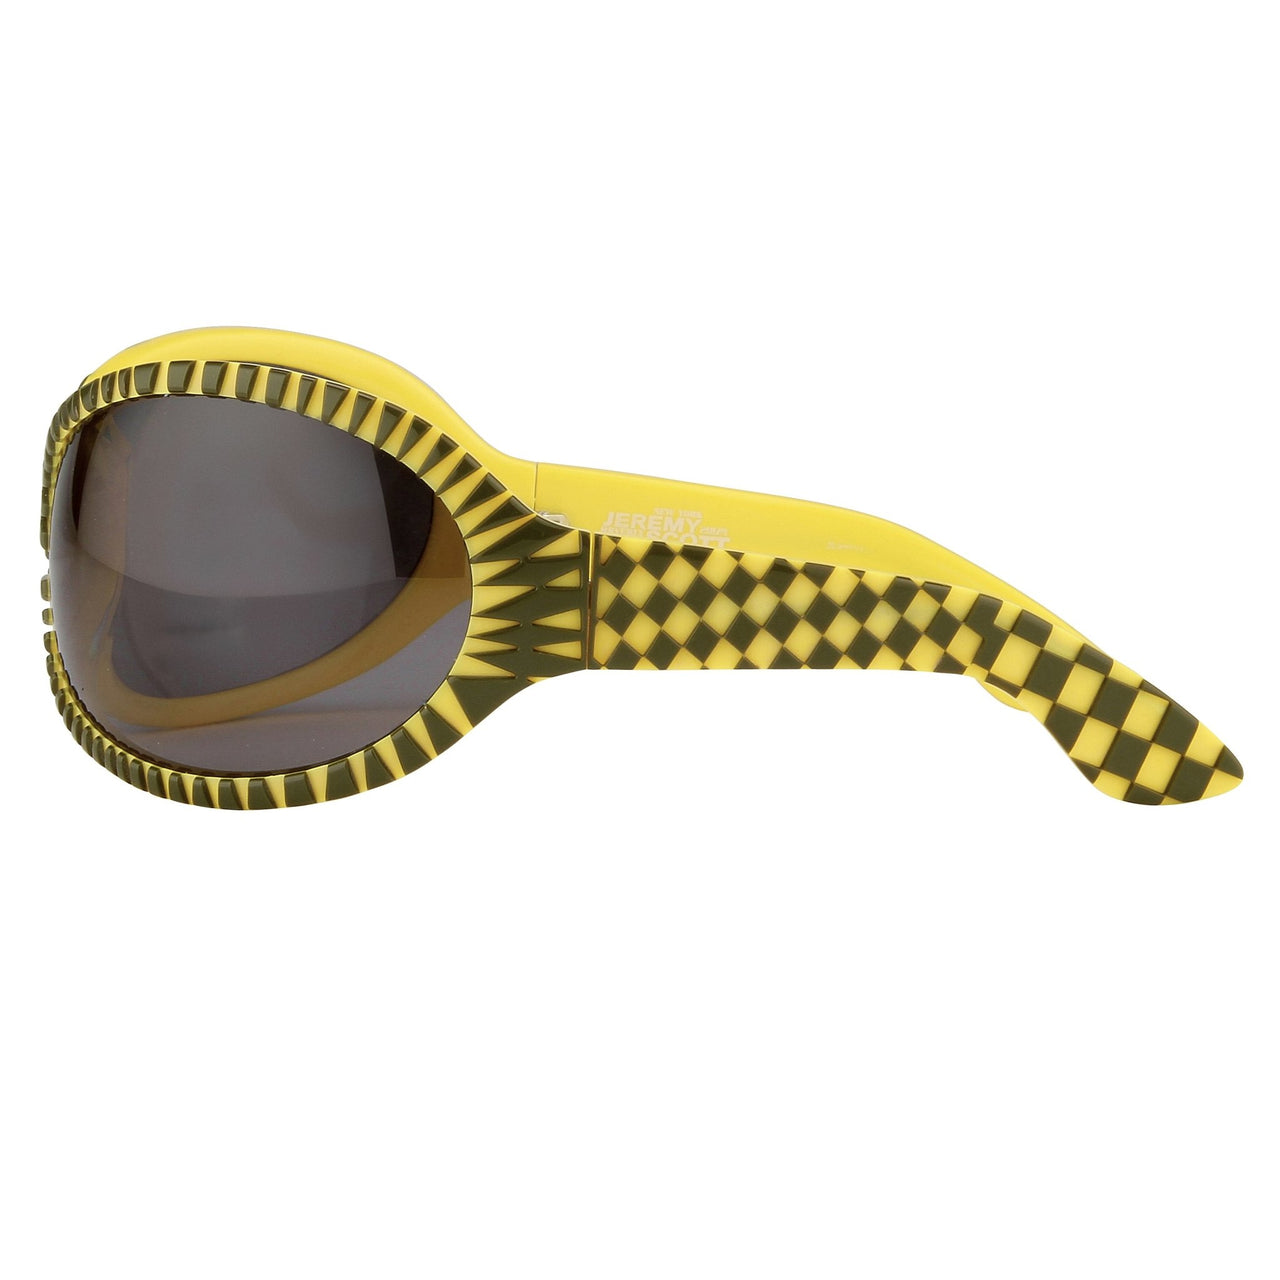 Jeremy Scott Sunglasses Wrap Around Black Yellow and Grey